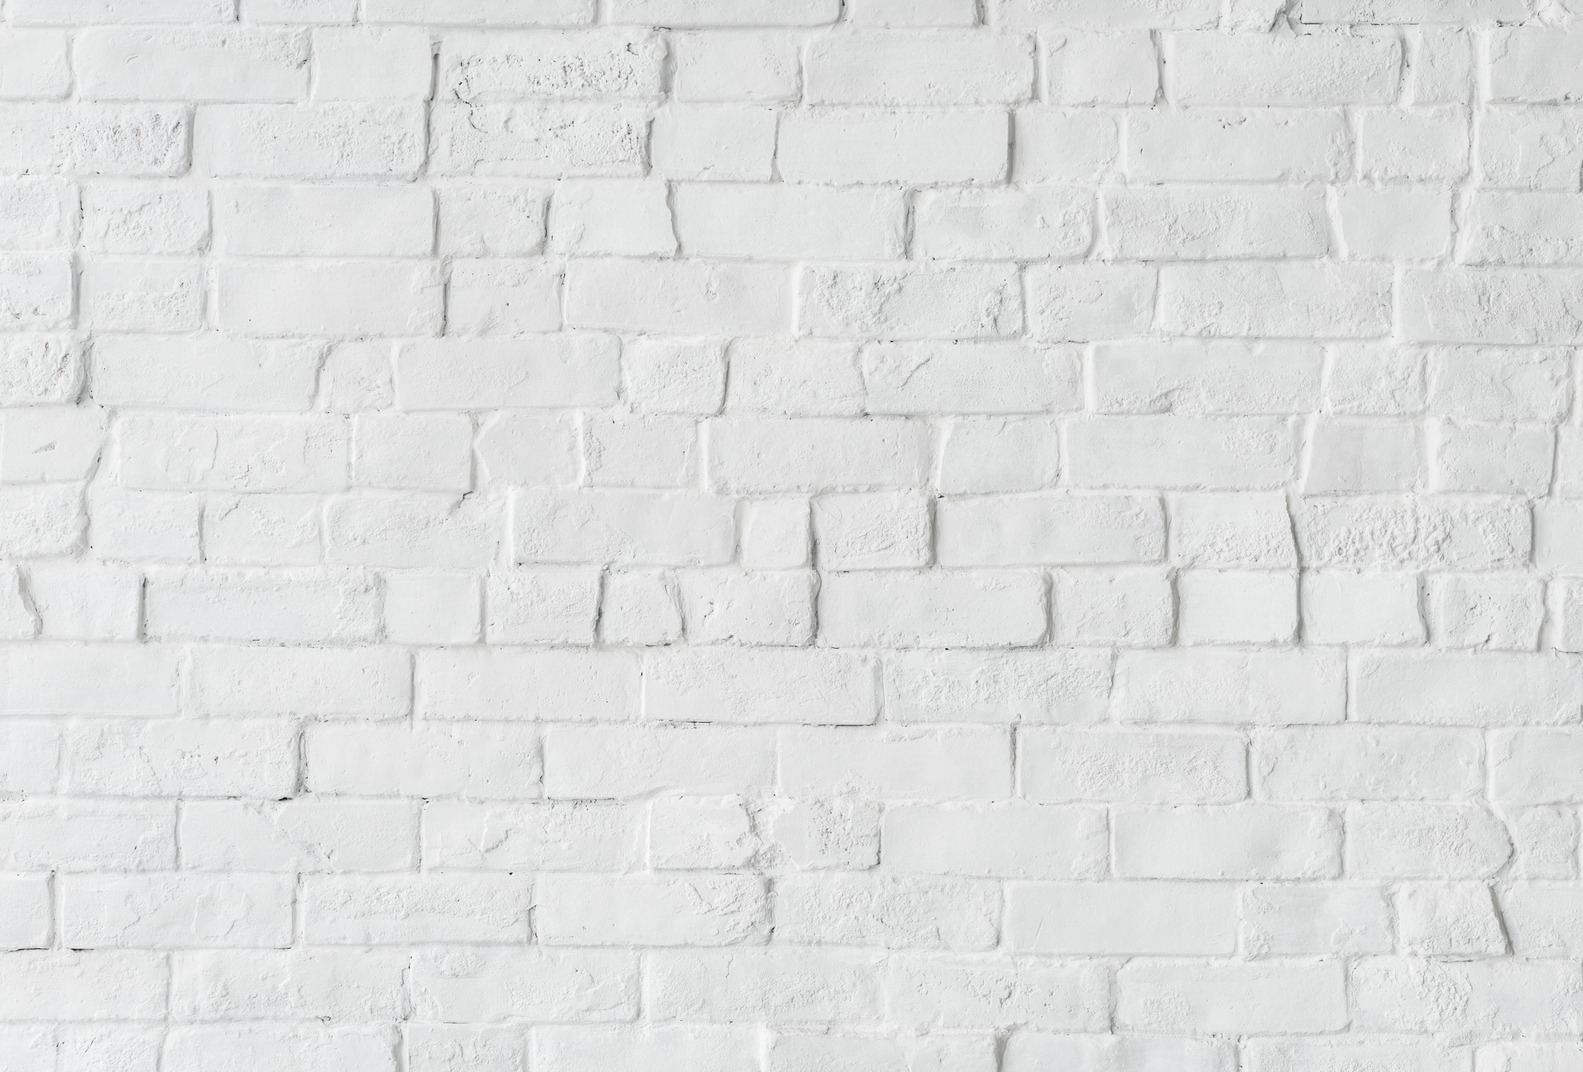 White brick wall background